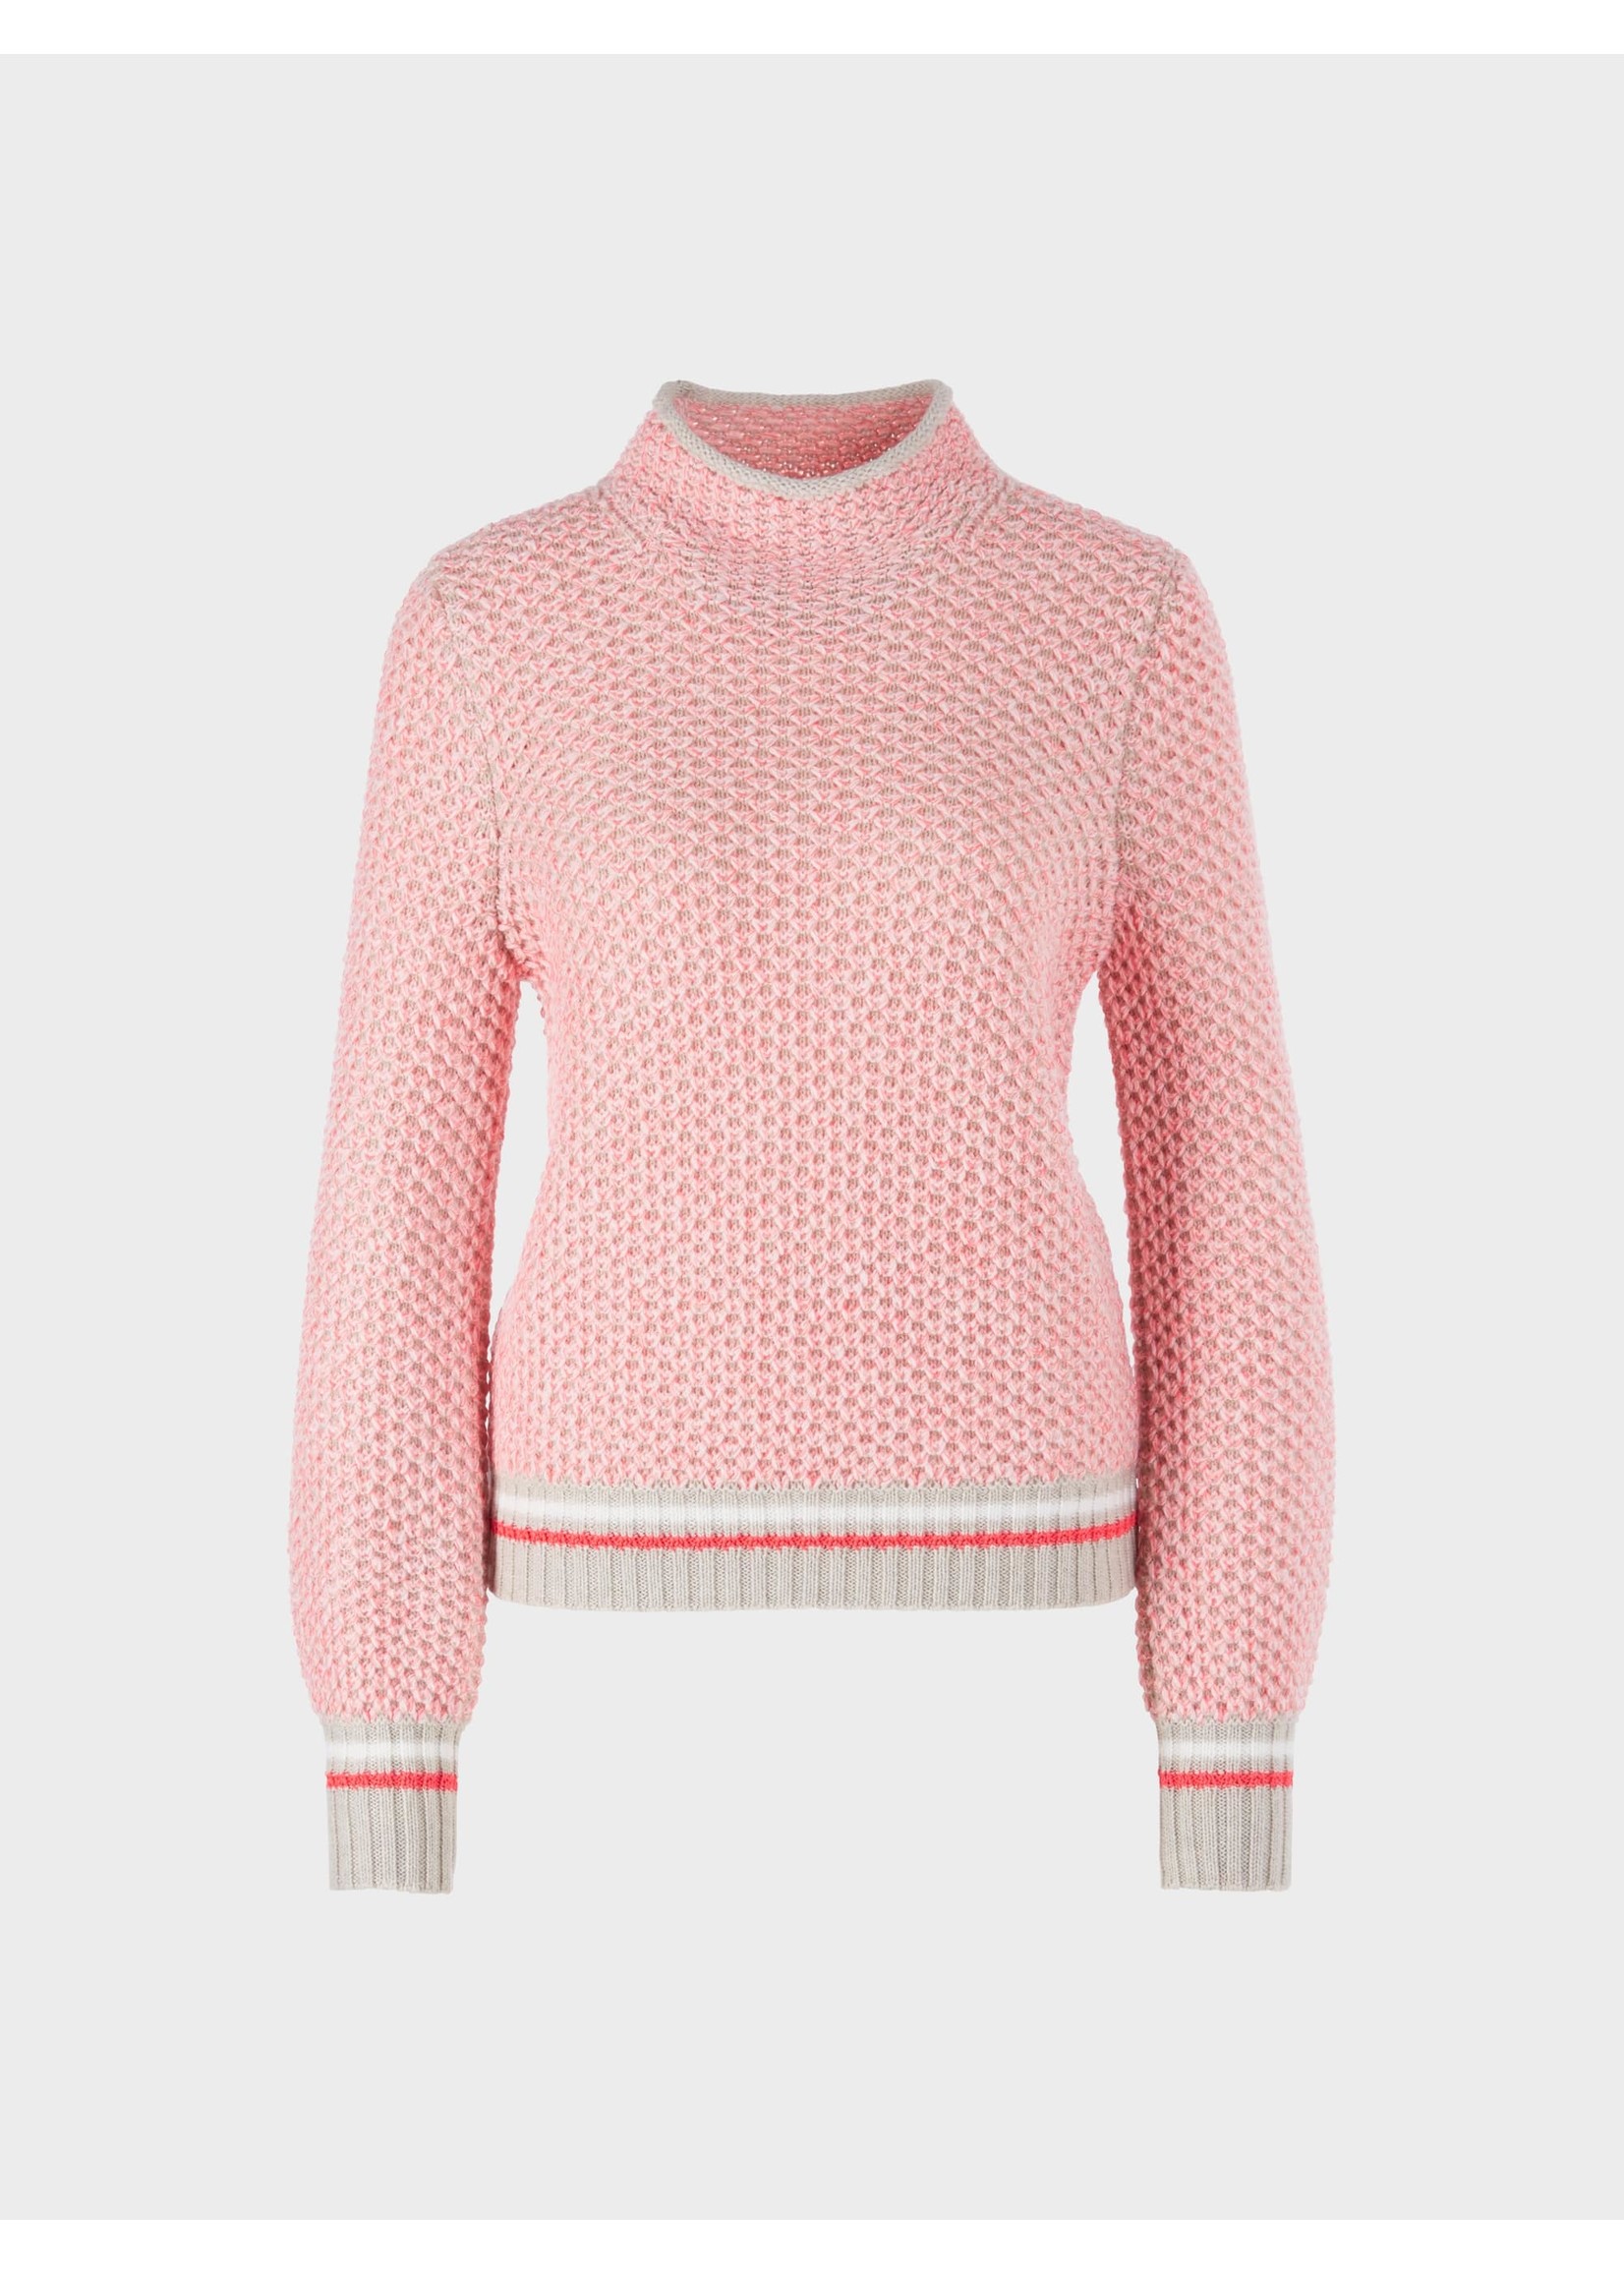 Sweater TC 41.11 M11 227